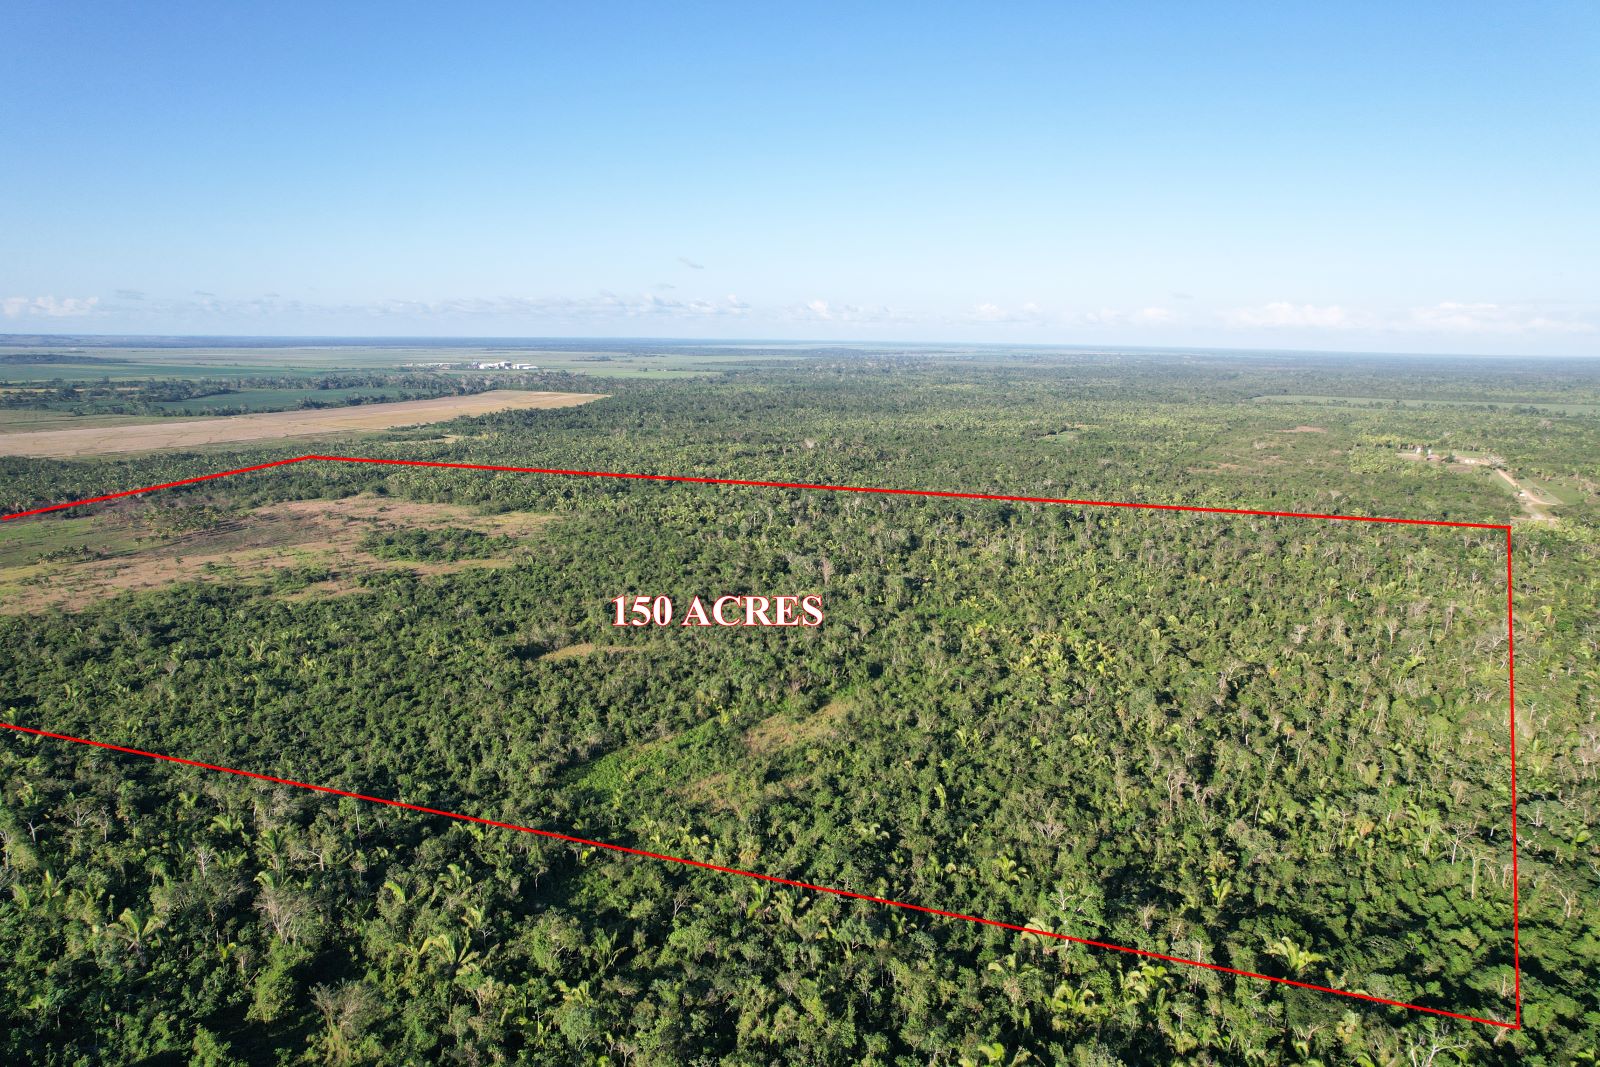 150 Acres of Prime Farmland on the Outskirts of Belmopan City